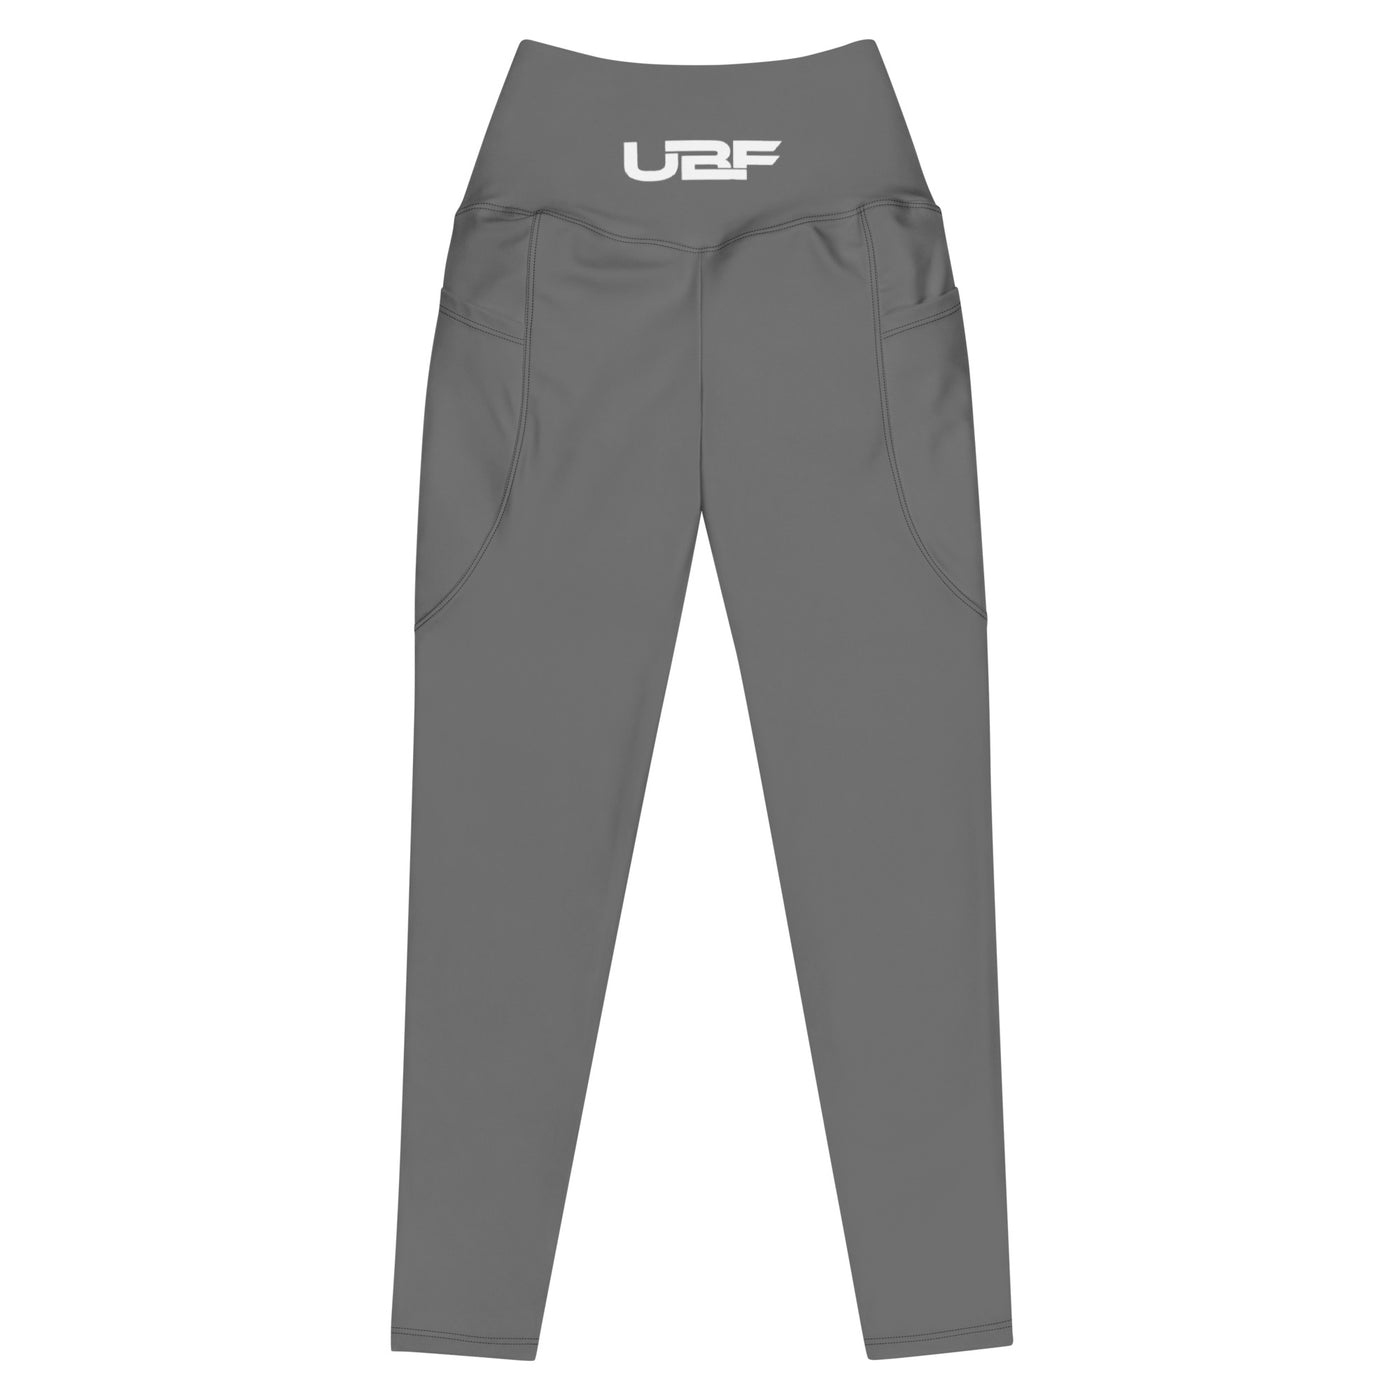 White UBF Grey Leggings with pockets